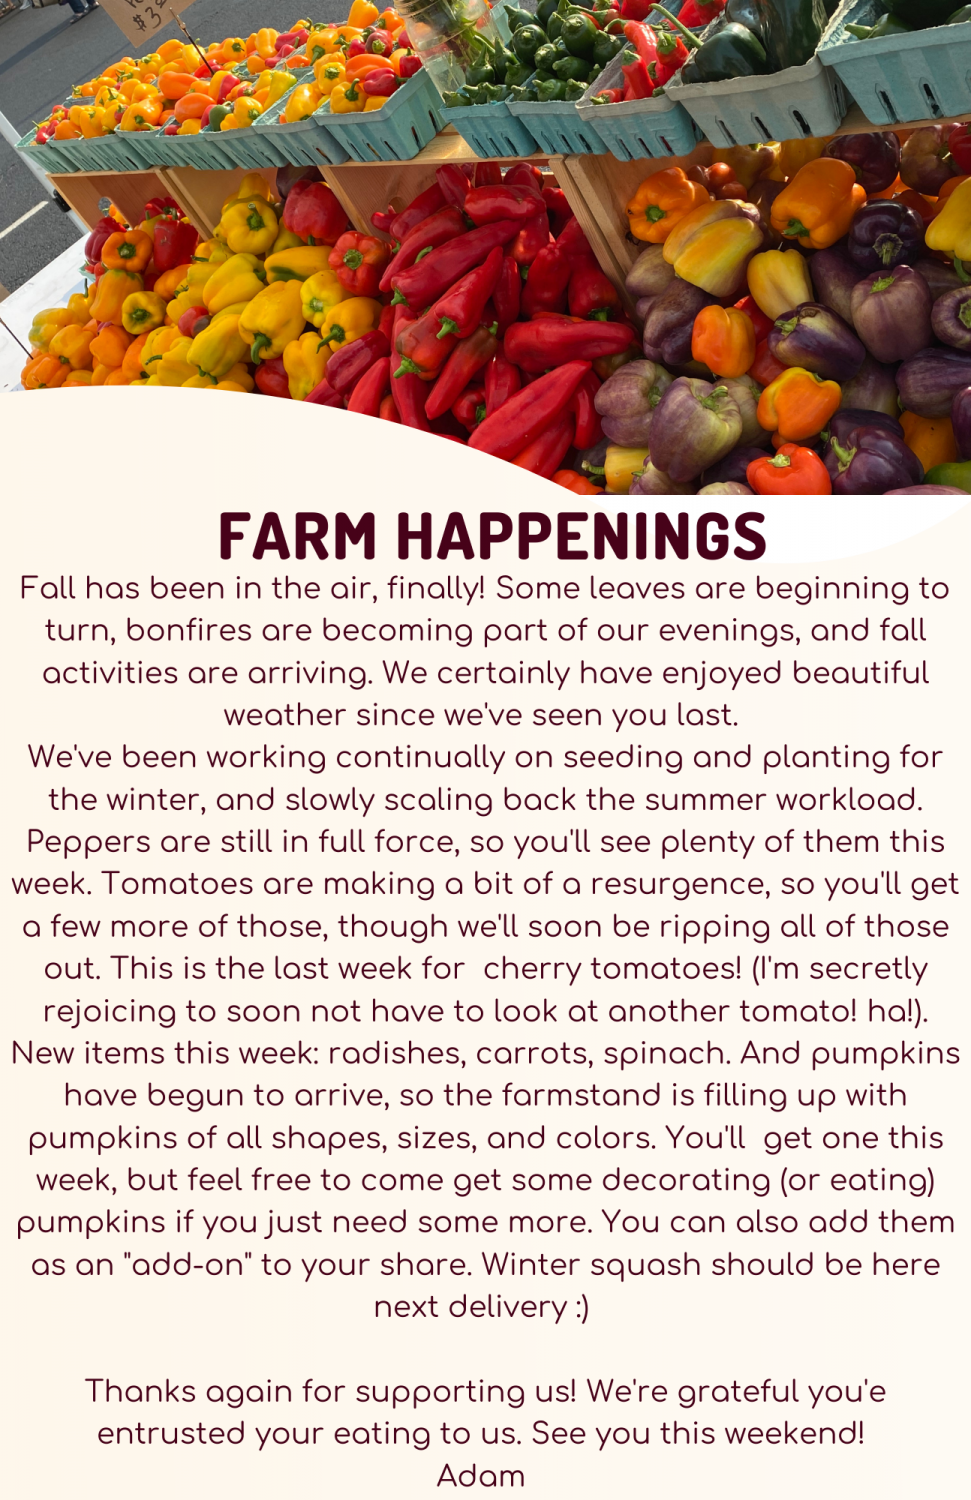 Next Happening: Farm Happenings for October 1, 2021